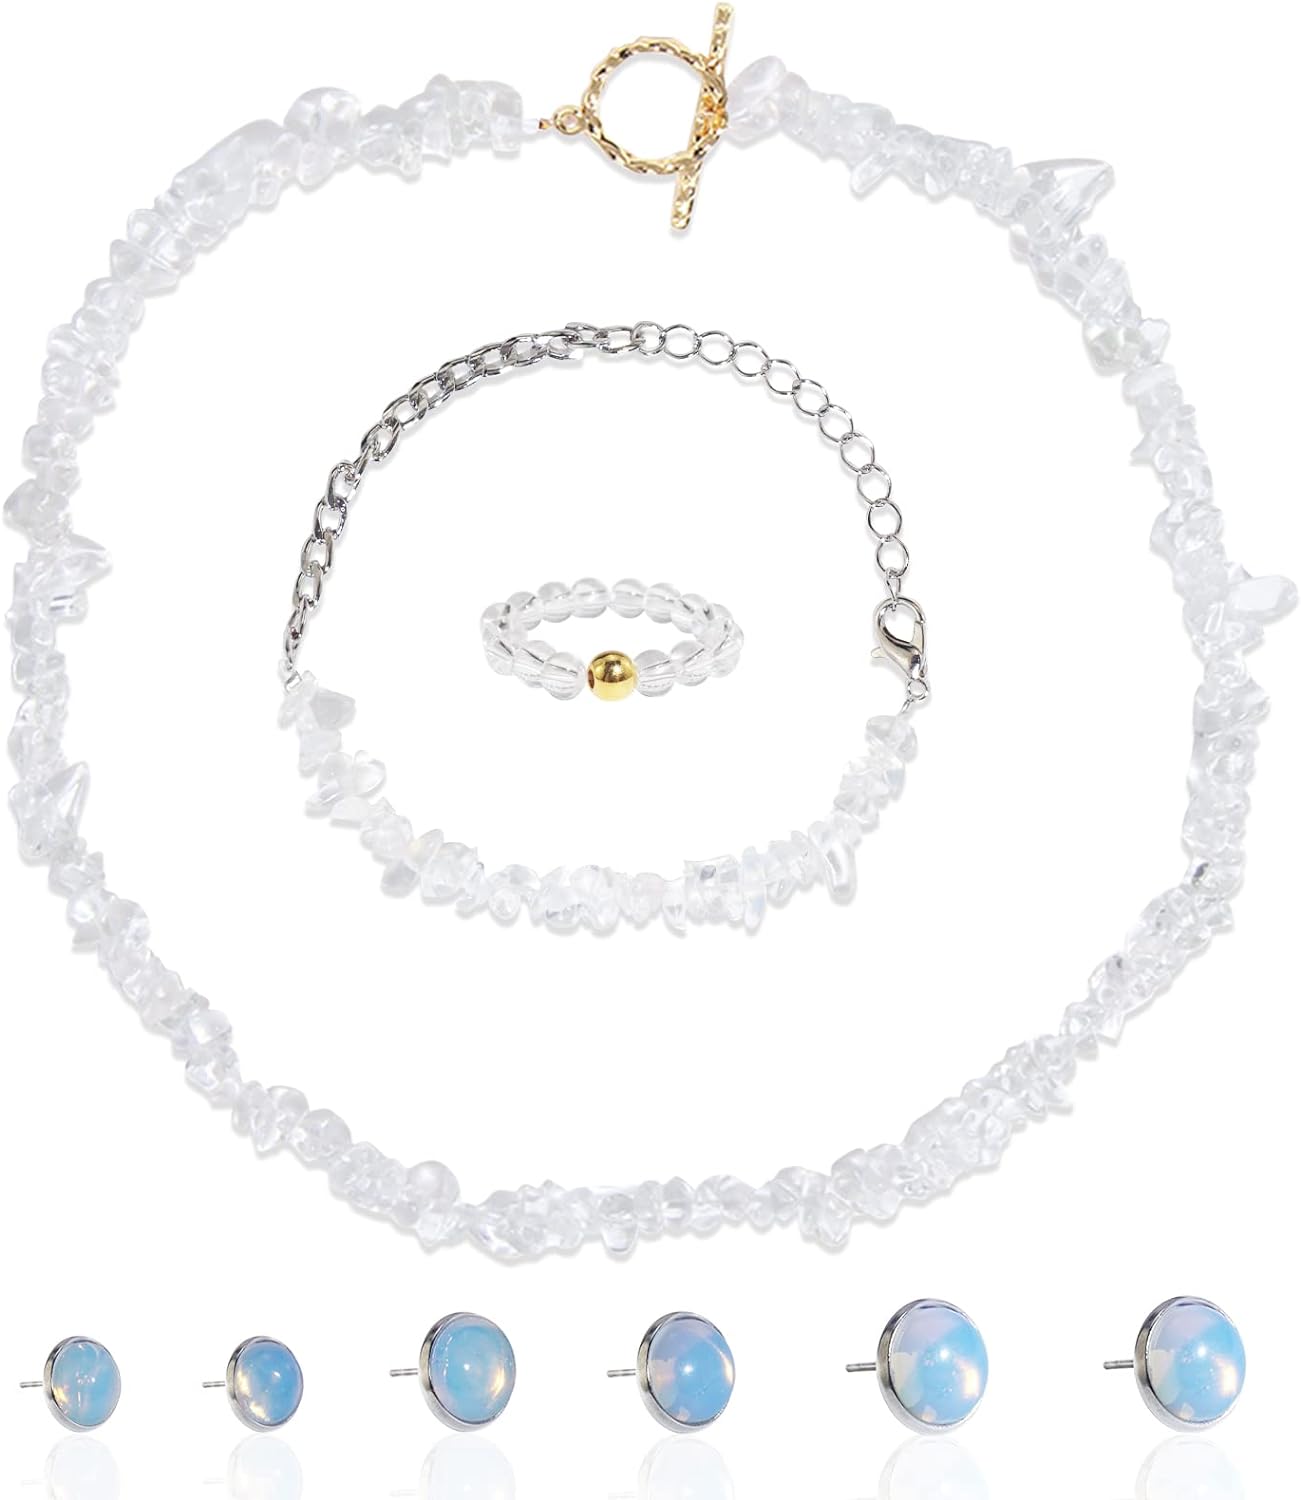 Hrwzs 4 Piece Bracelet Earring Set Beads Jewelry Set for Women, Natural Crystal Gemstone Bead Ring Irregular Gravel Bracelet Necklace Ring Earring Stud Combination Set for Women Girl Gift